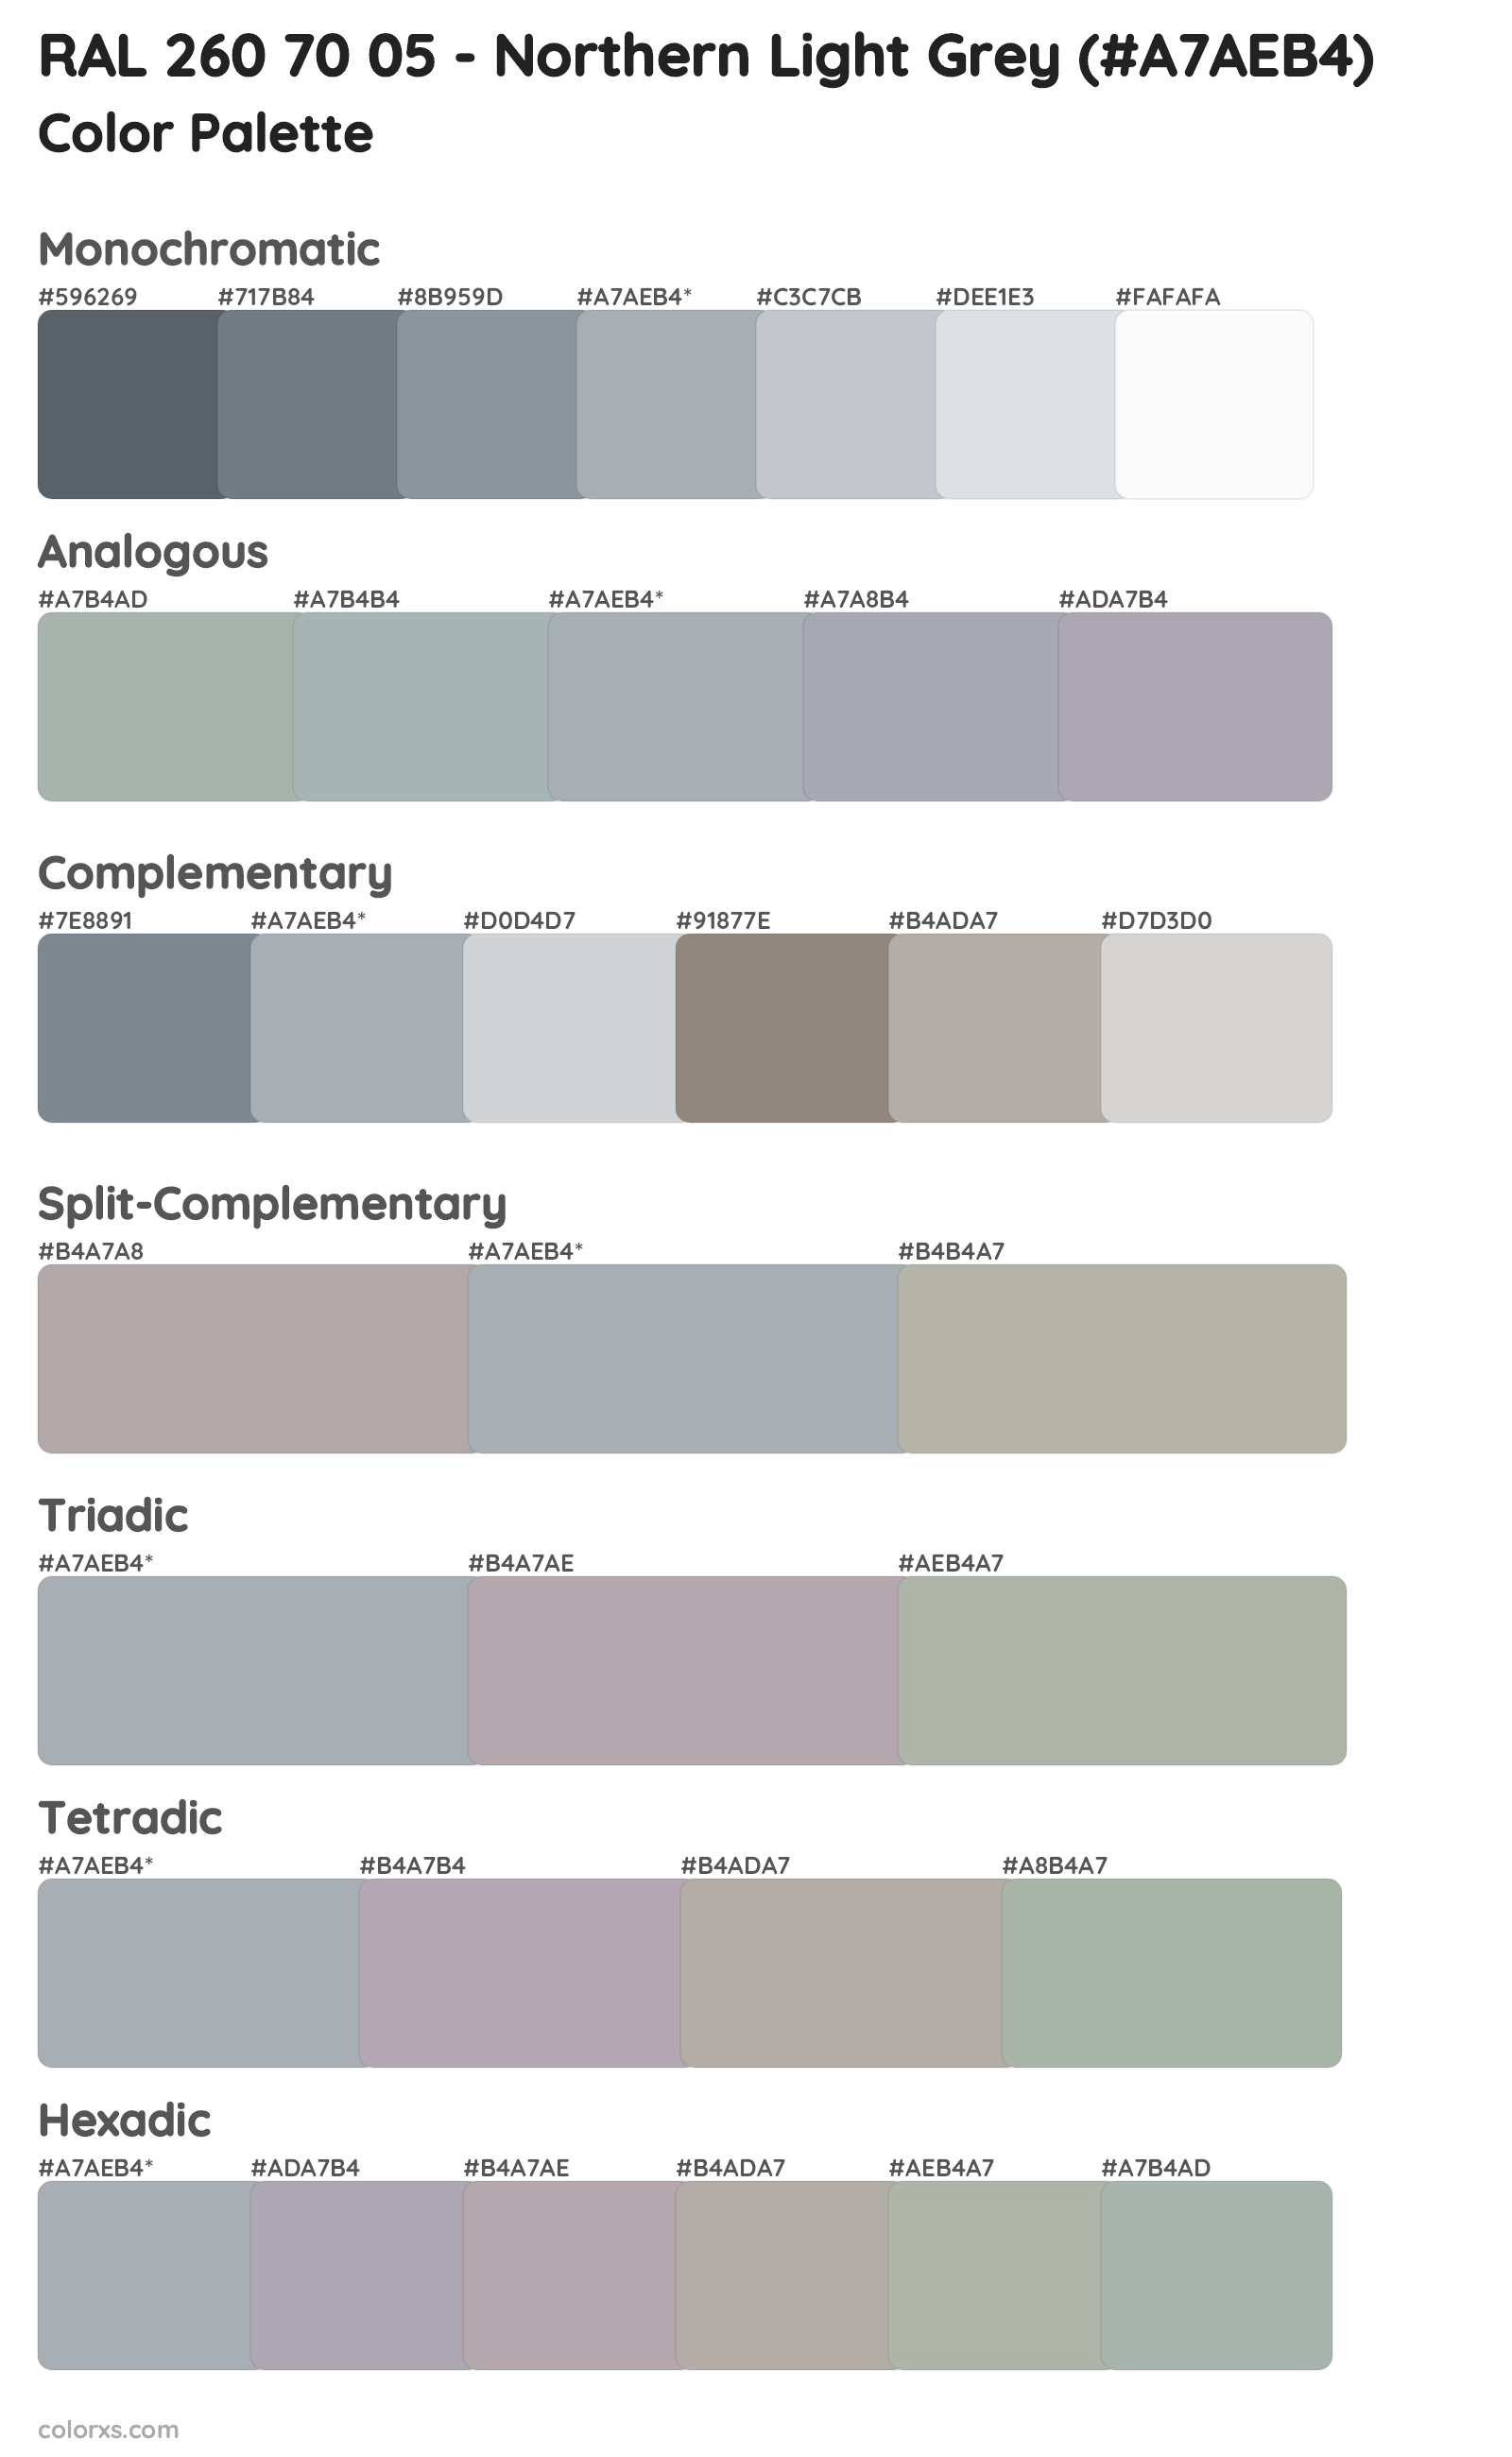 RAL 260 70 05 - Northern Light Grey Color Scheme Palettes